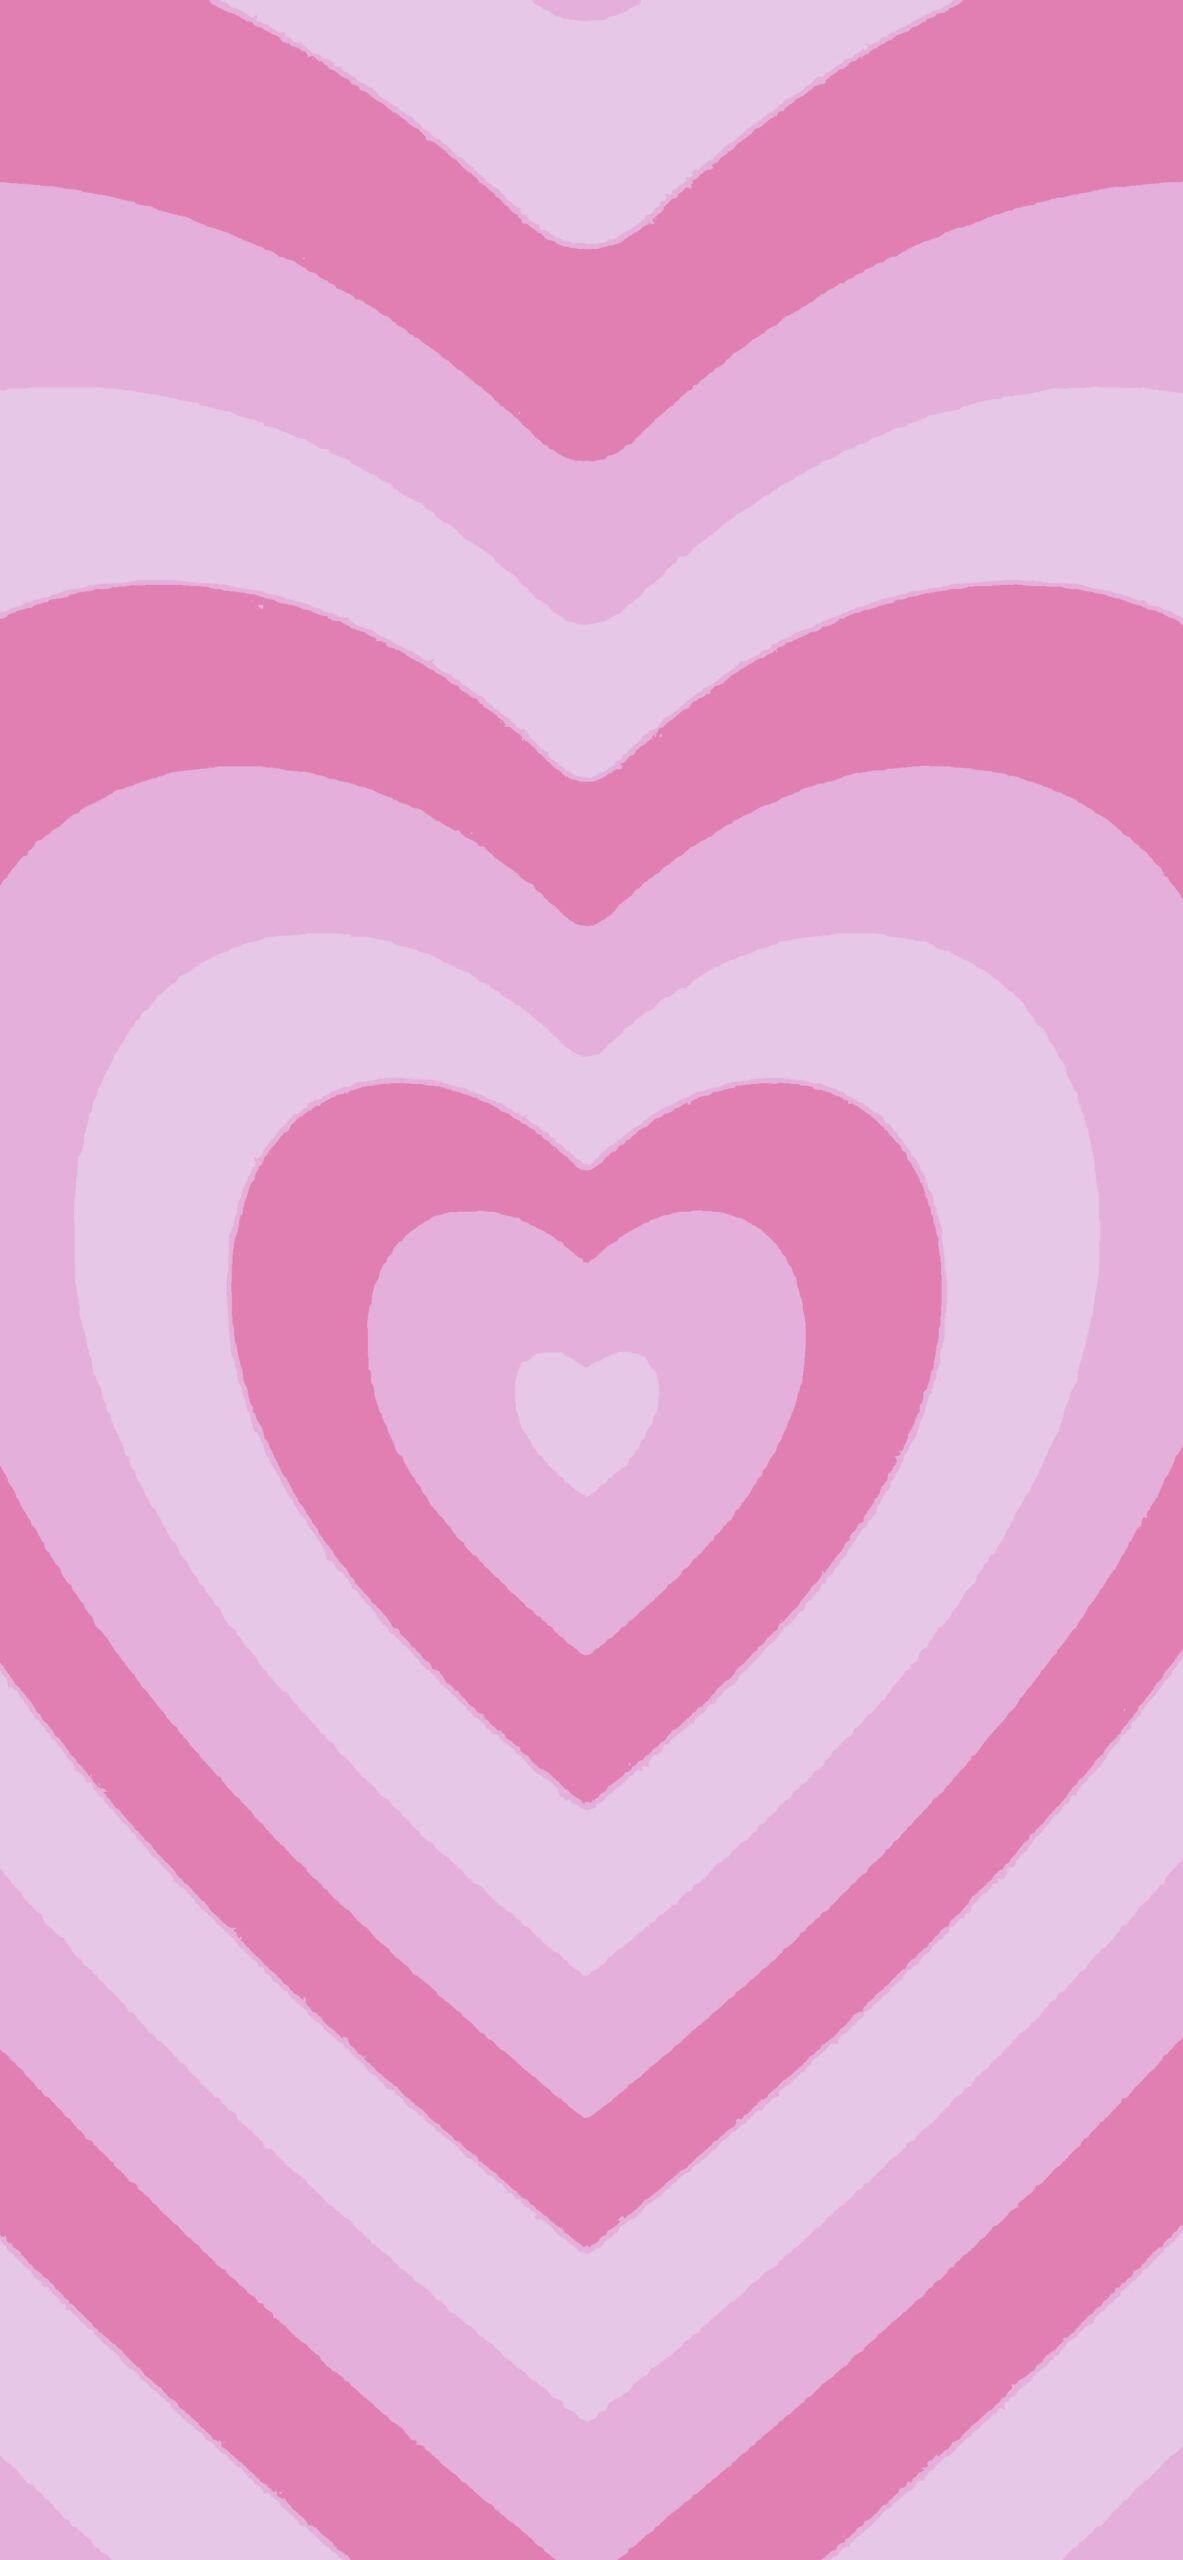  Rosa Hintergrundbild 1183x2560. Pink Heart Wallpaper Pink Aesthetic Wallpaper iPhone & Android